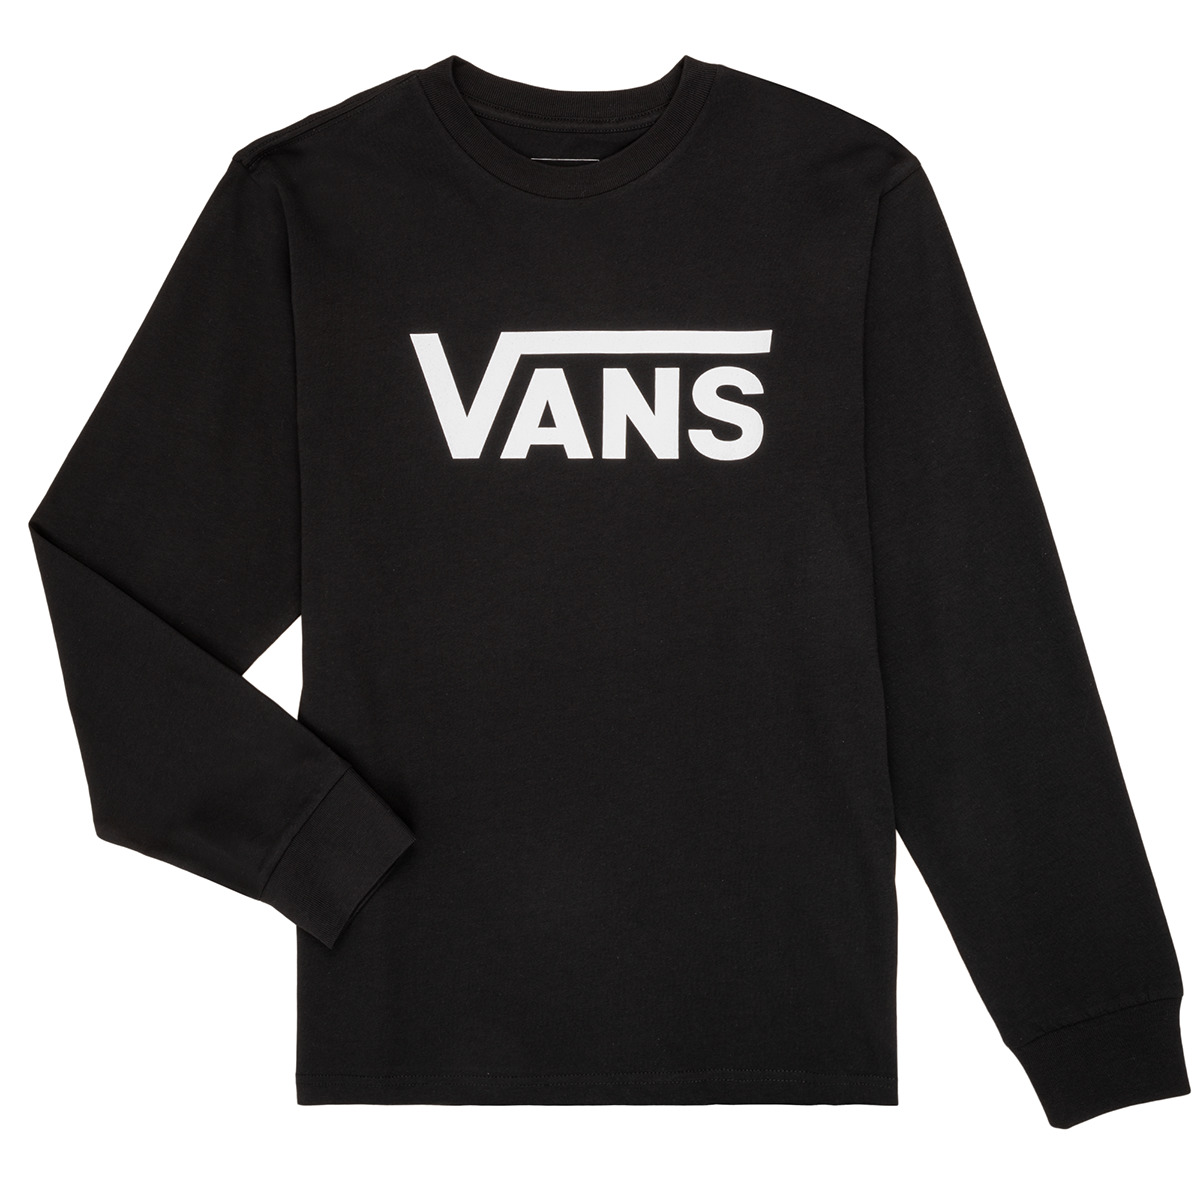 Clothing Children Long sleeved shirts Vans BY VANS CLASSIC LS Black